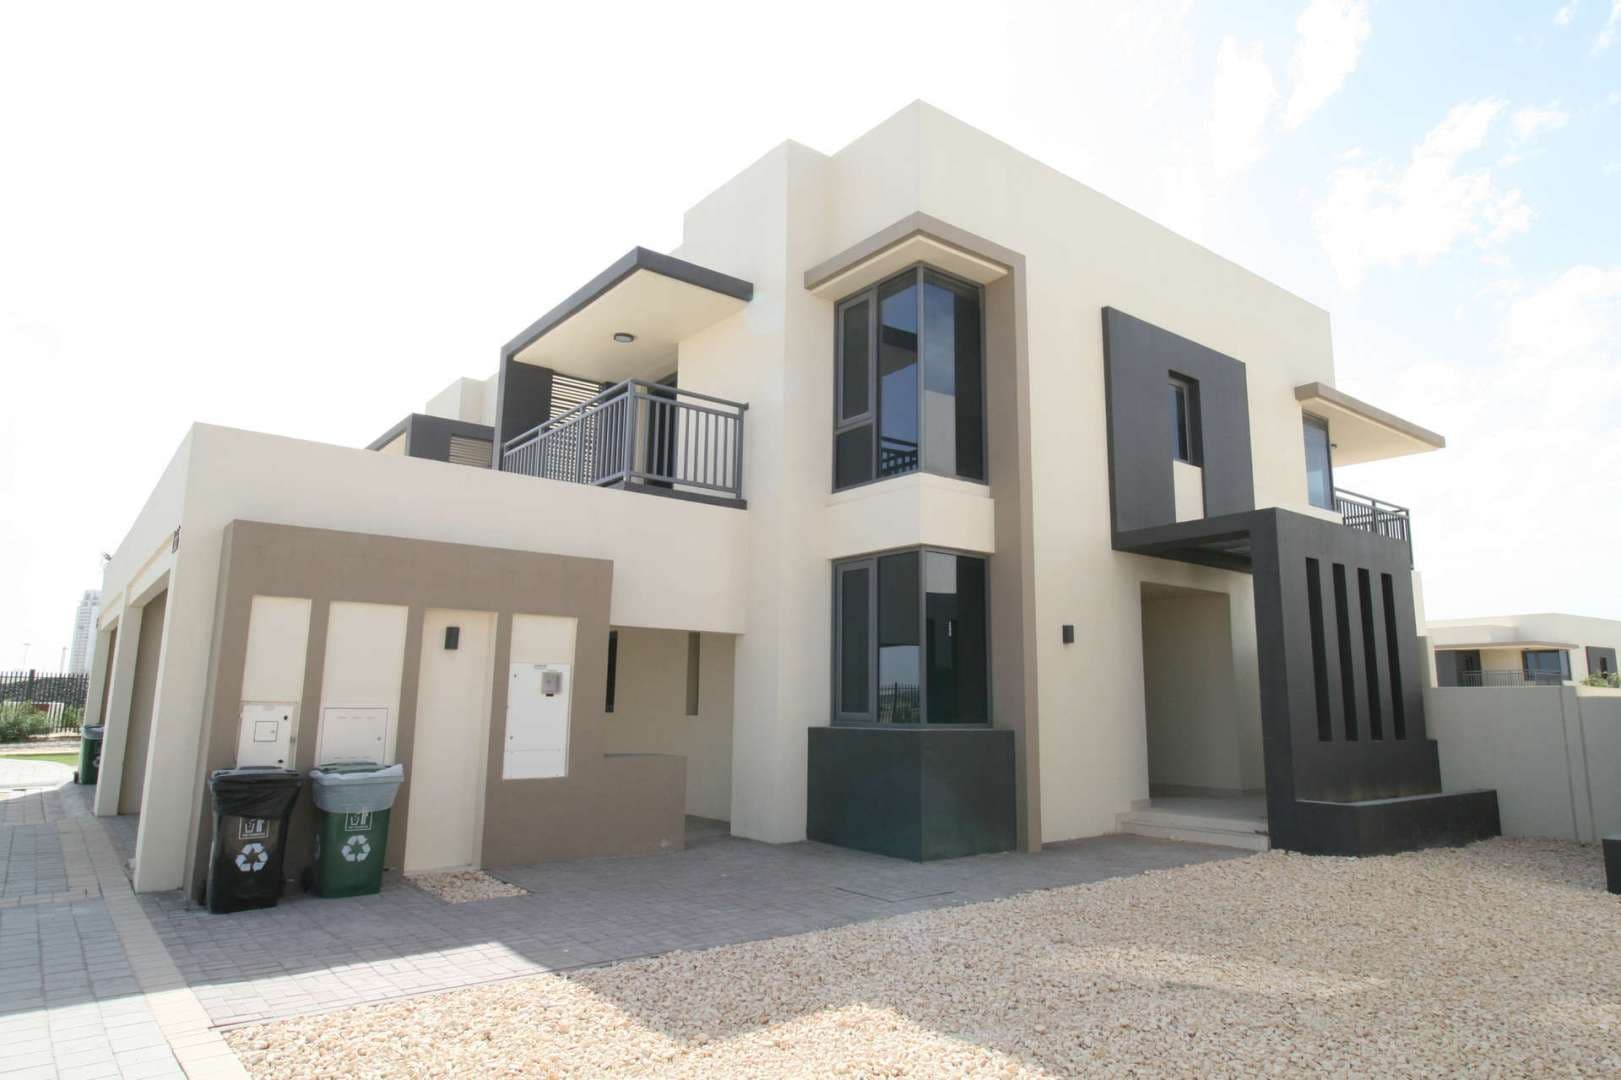 5 Bedroom Townhouse For Sale Maple At Dubai Hills Estate Lp07033 2a198bca449f8c00.jpg